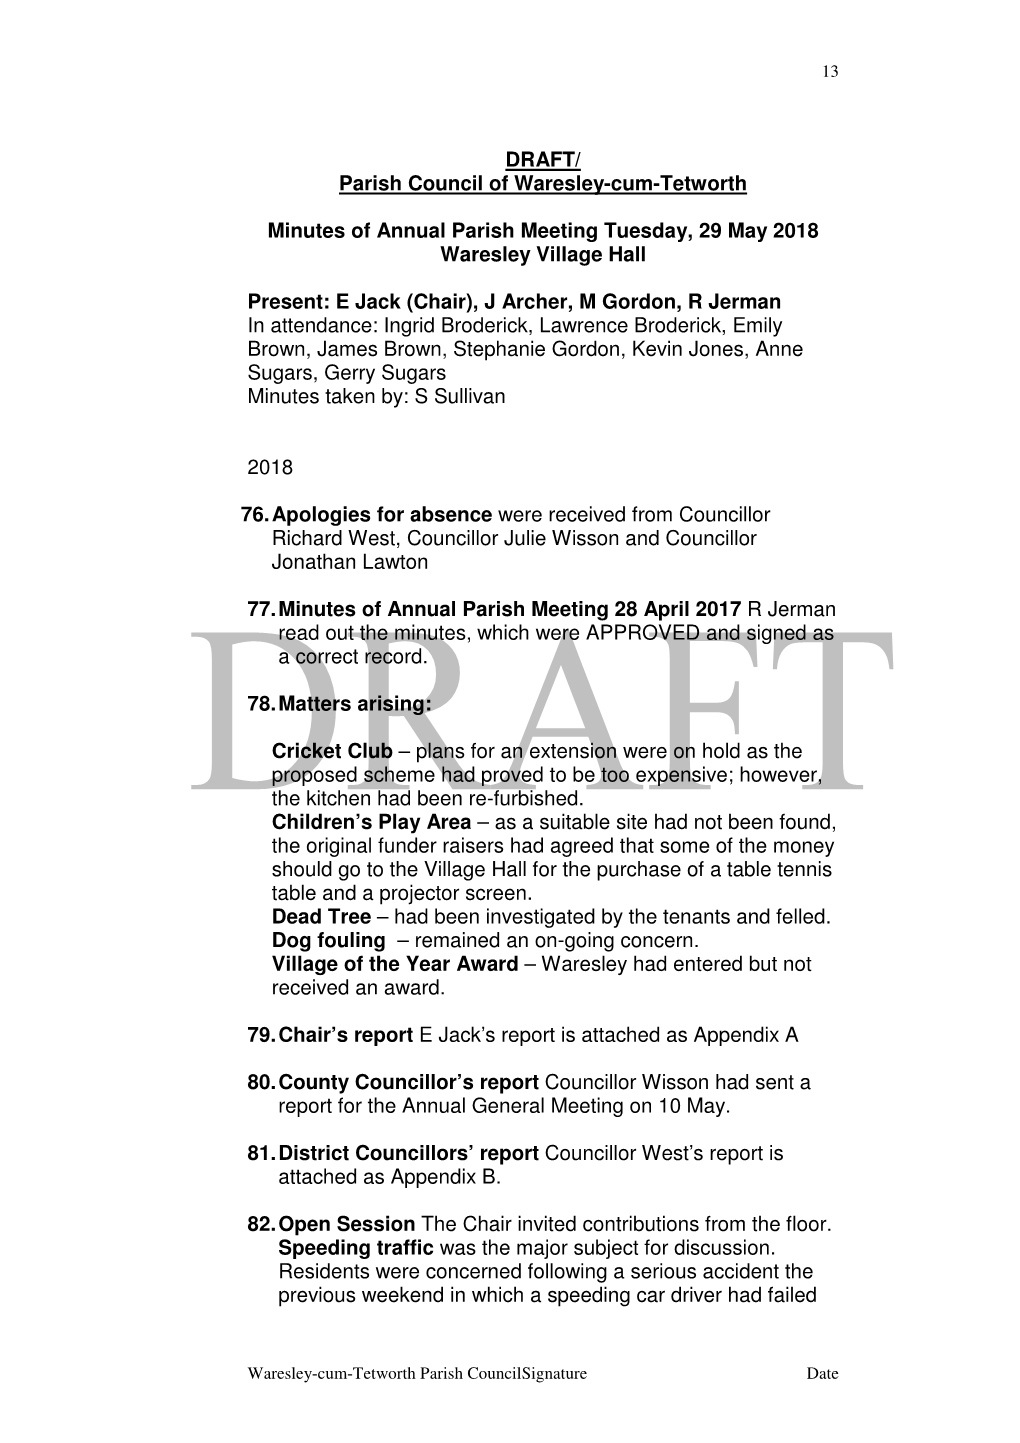 DRAFT/ Parish Council of Waresley-Cum-Tetworth Minutes Of